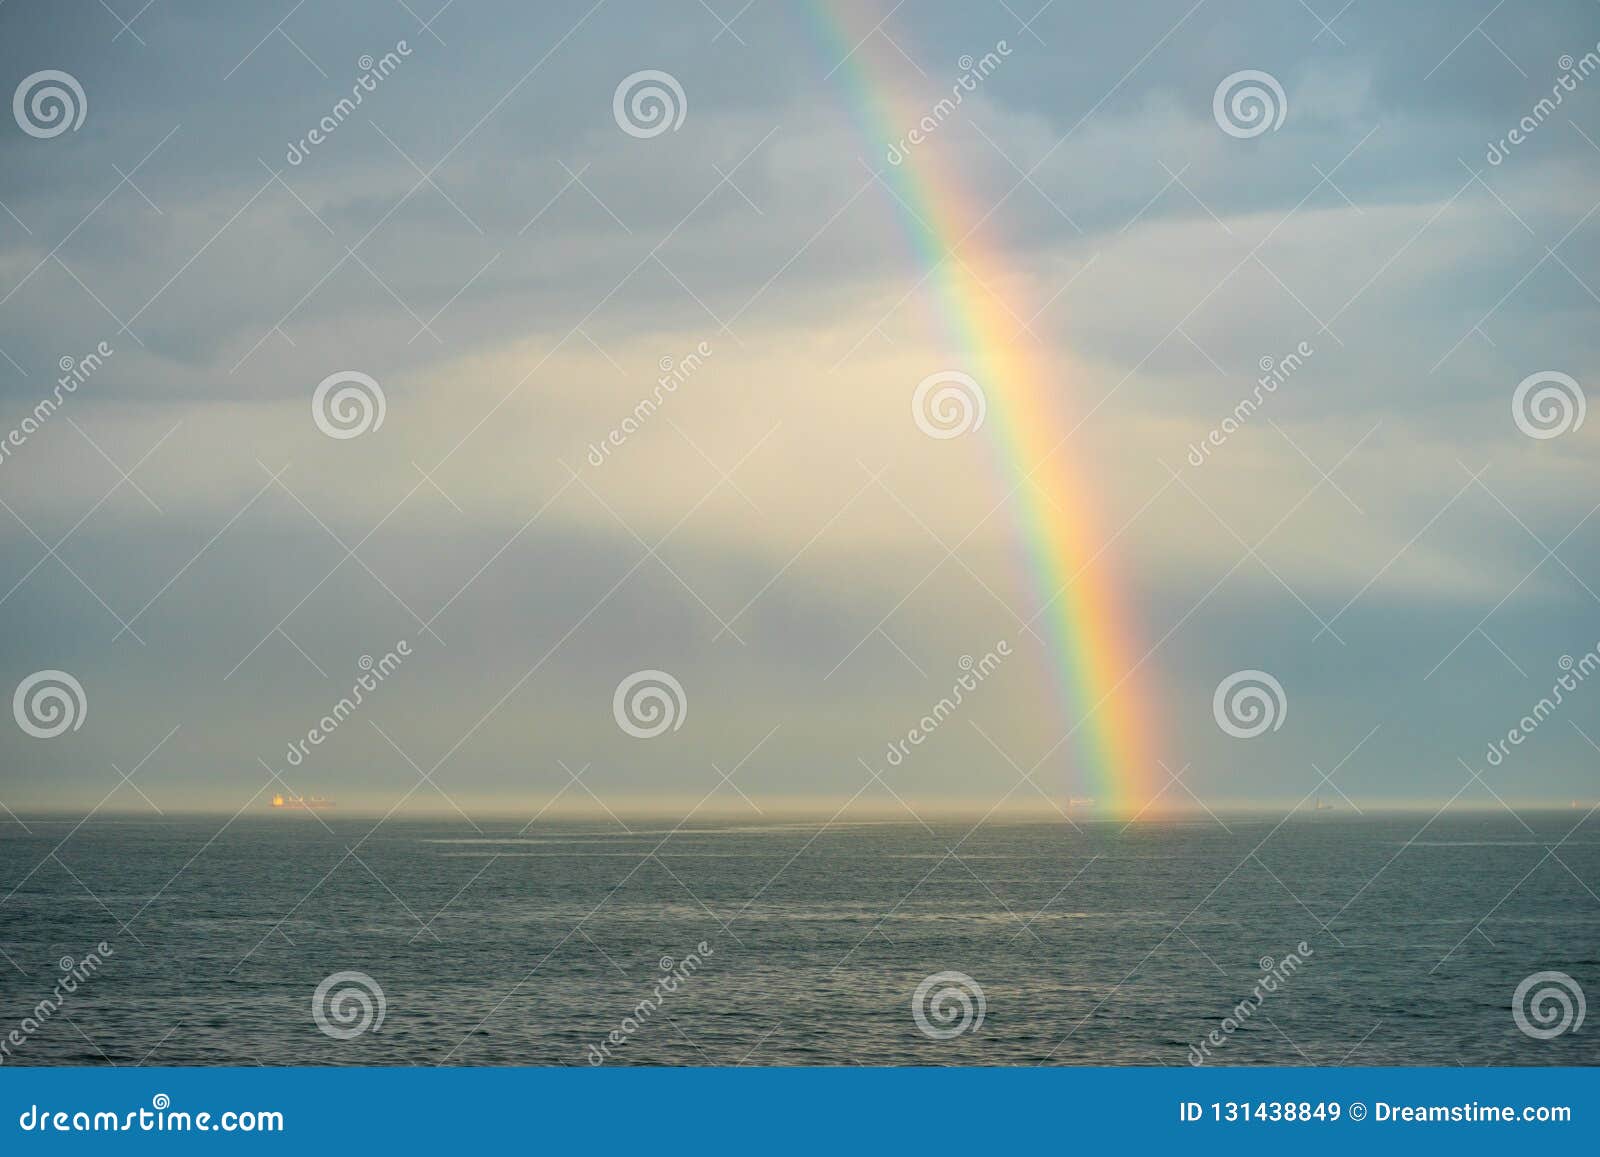 the boat follow the rainbow on the black sea